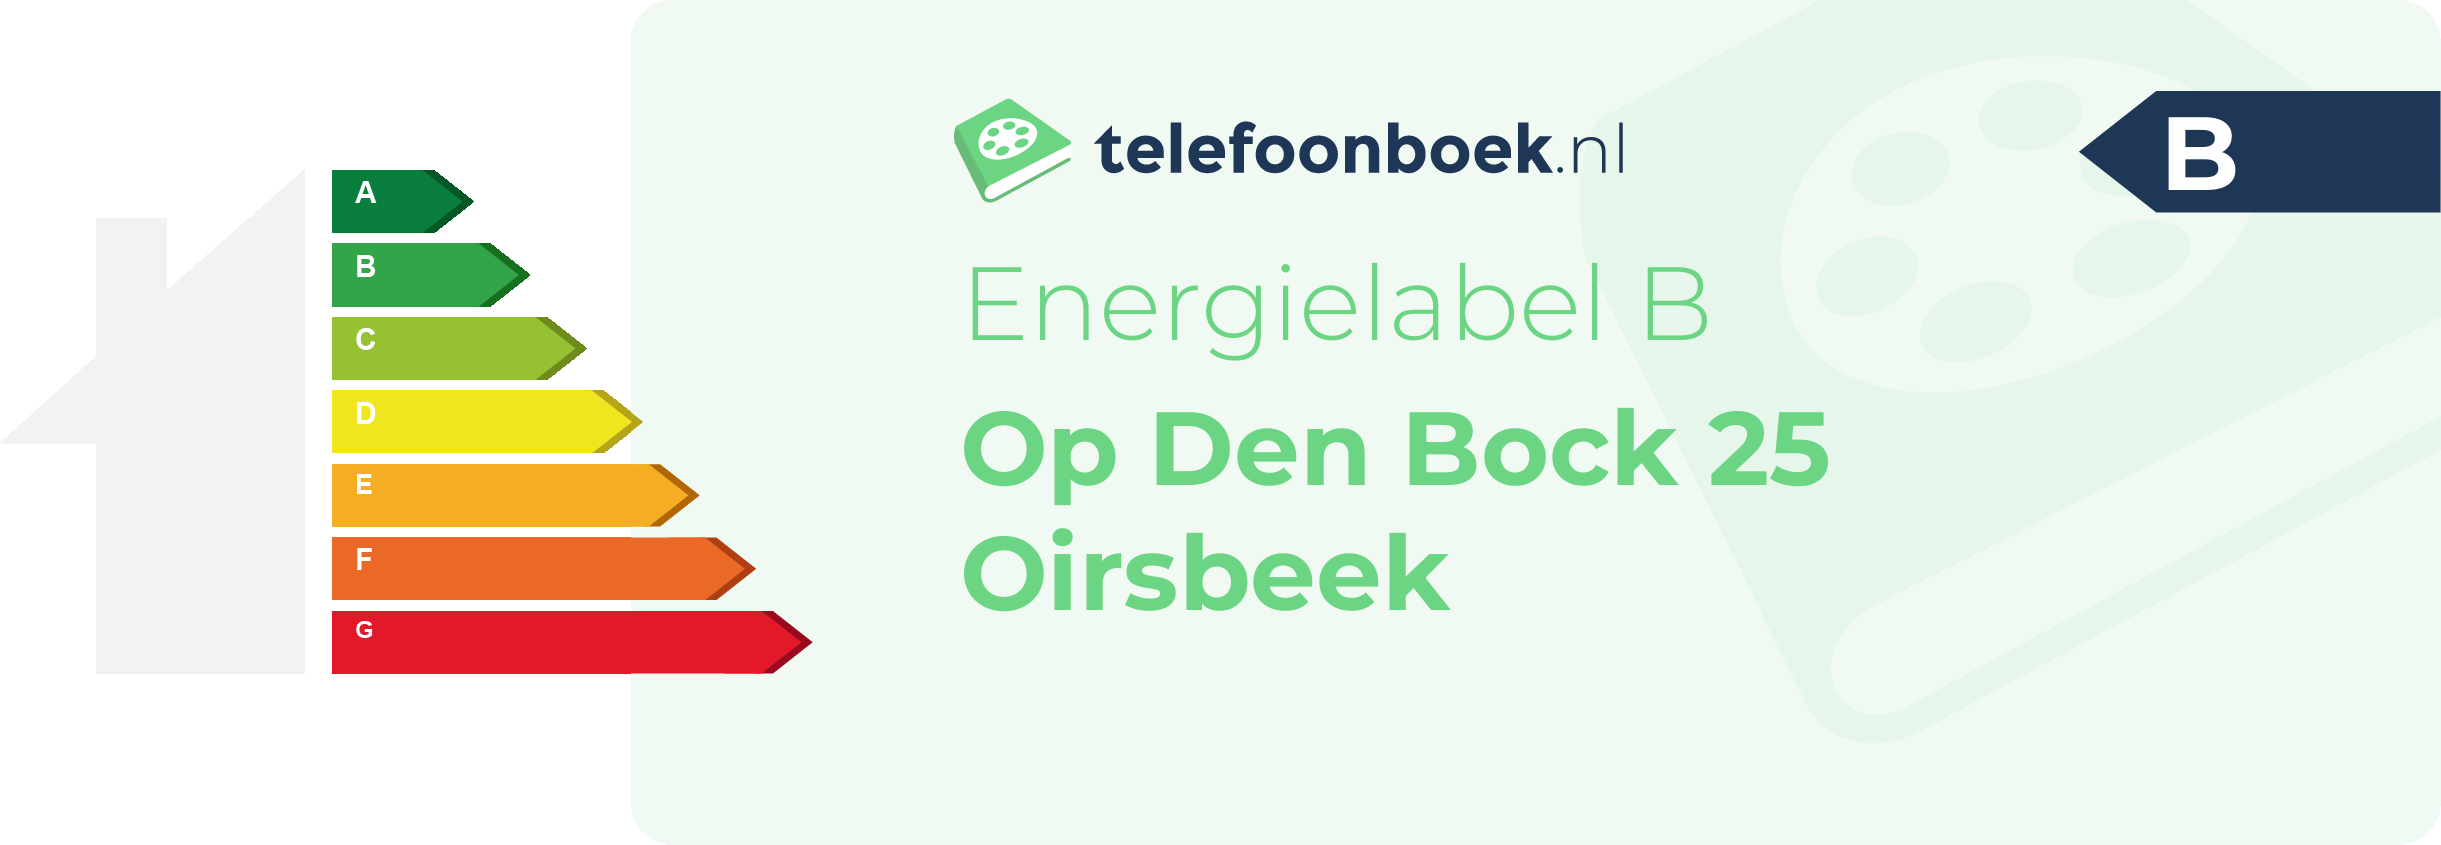 Energielabel Op Den Bock 25 Oirsbeek